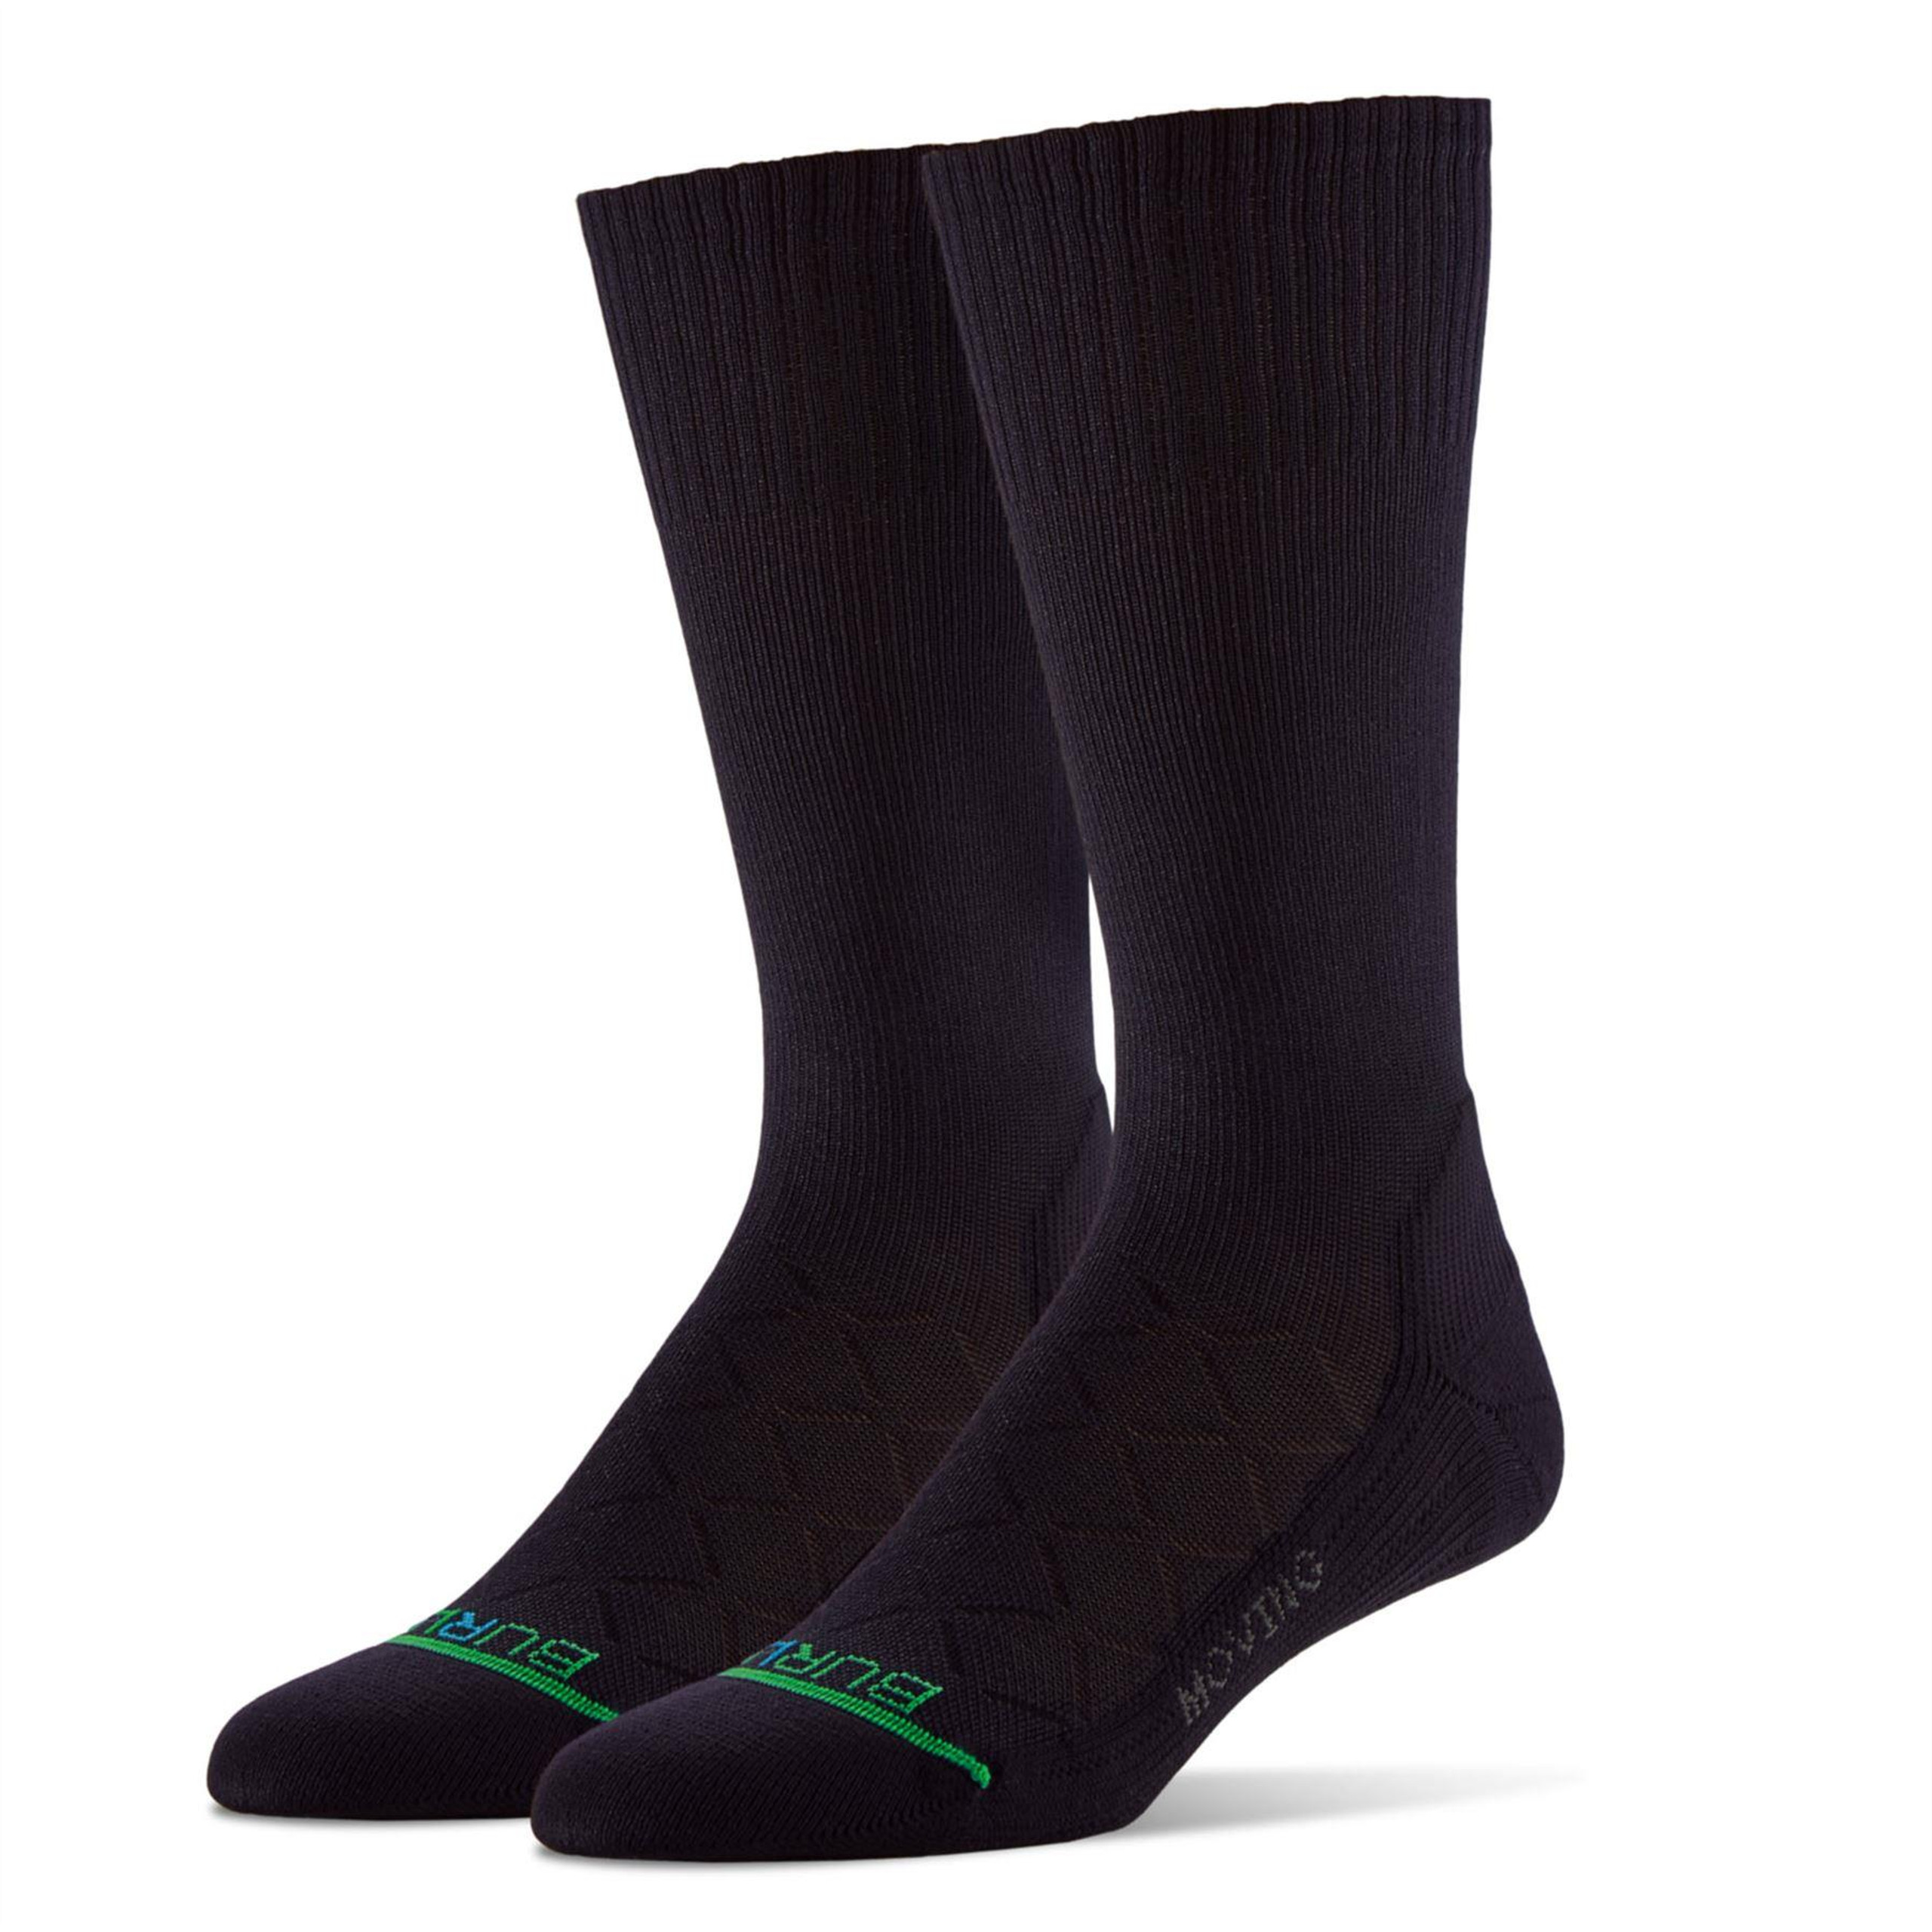 Burlix Socks for Men: Made in the USA | Burlix.com